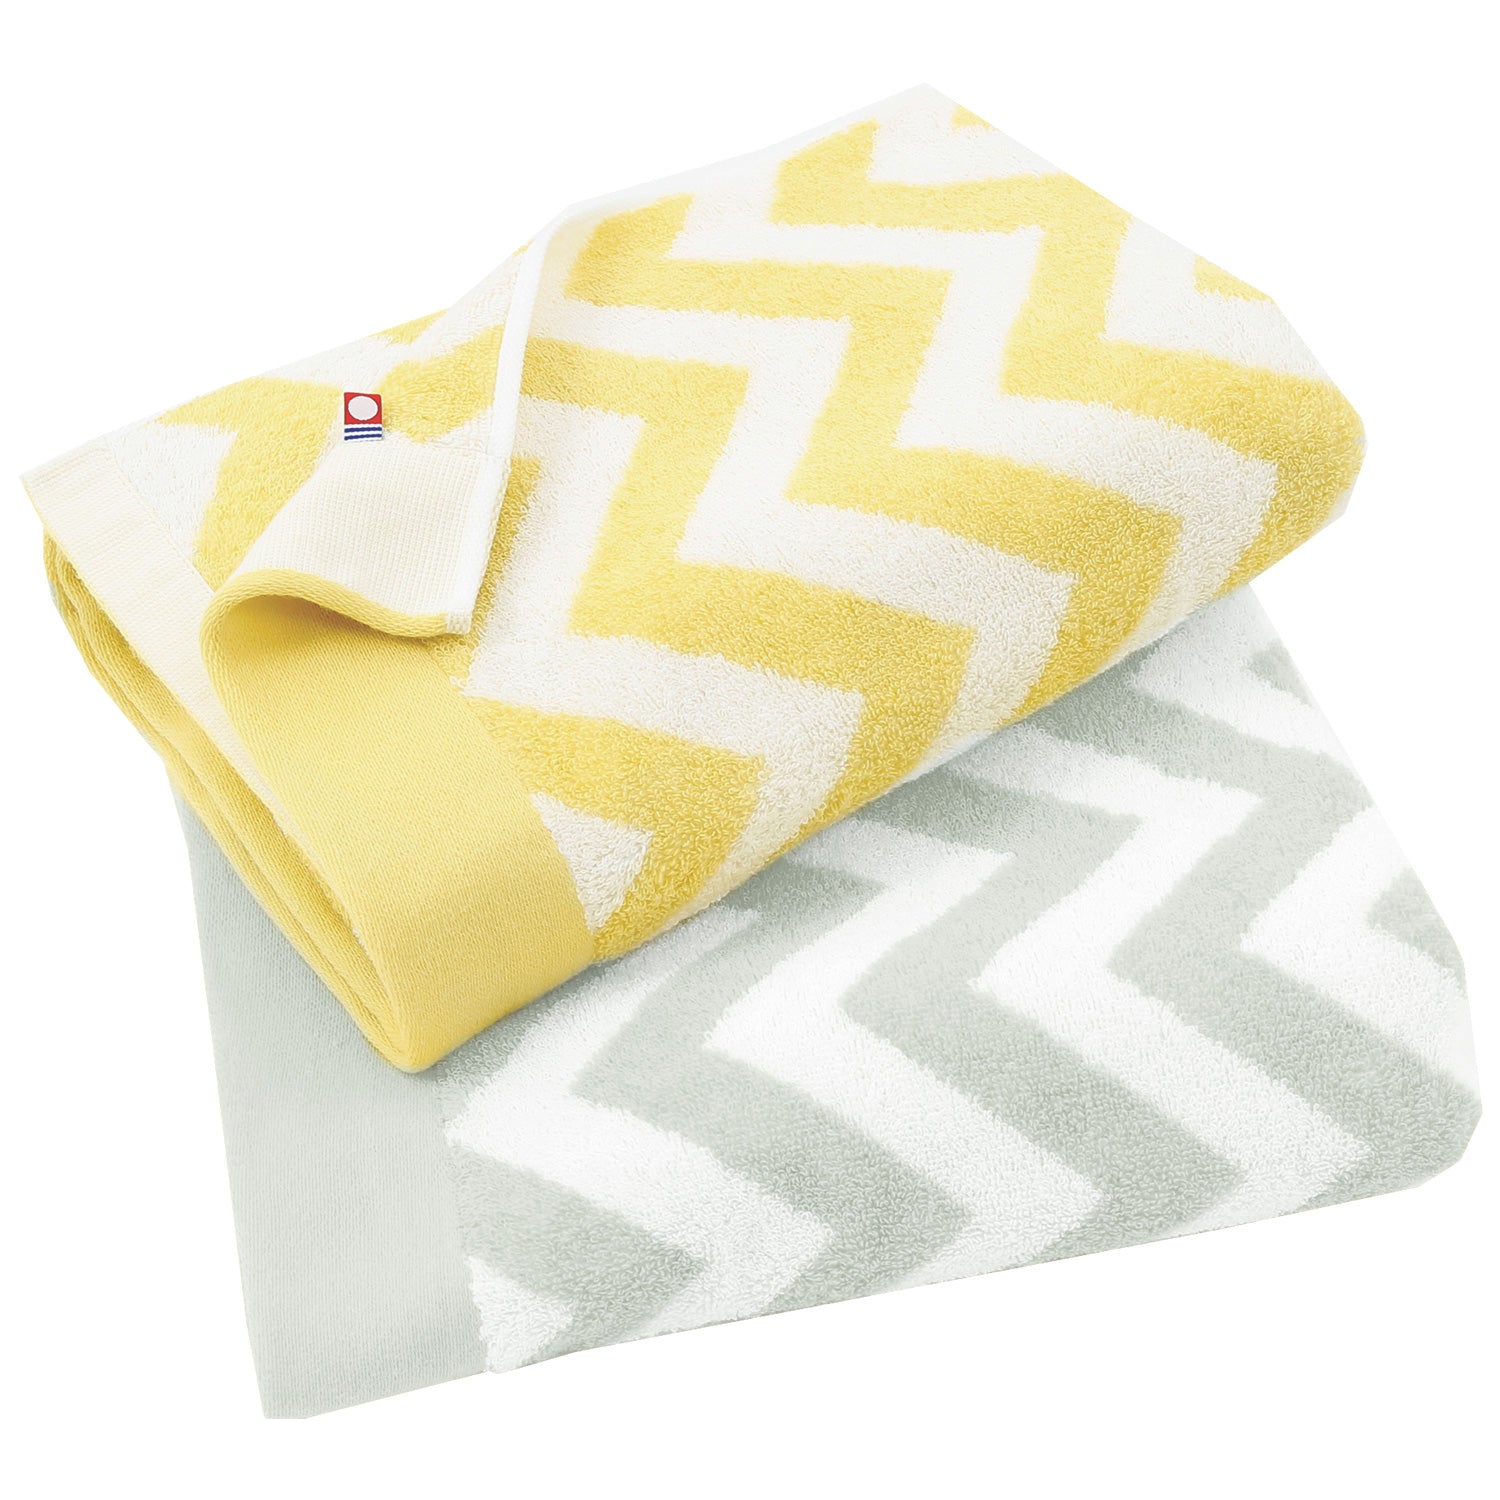 Hiorie Imabari Towel Modern Nordic Fluffy Bath Towel 2 Sheets 100% cotton  Japan